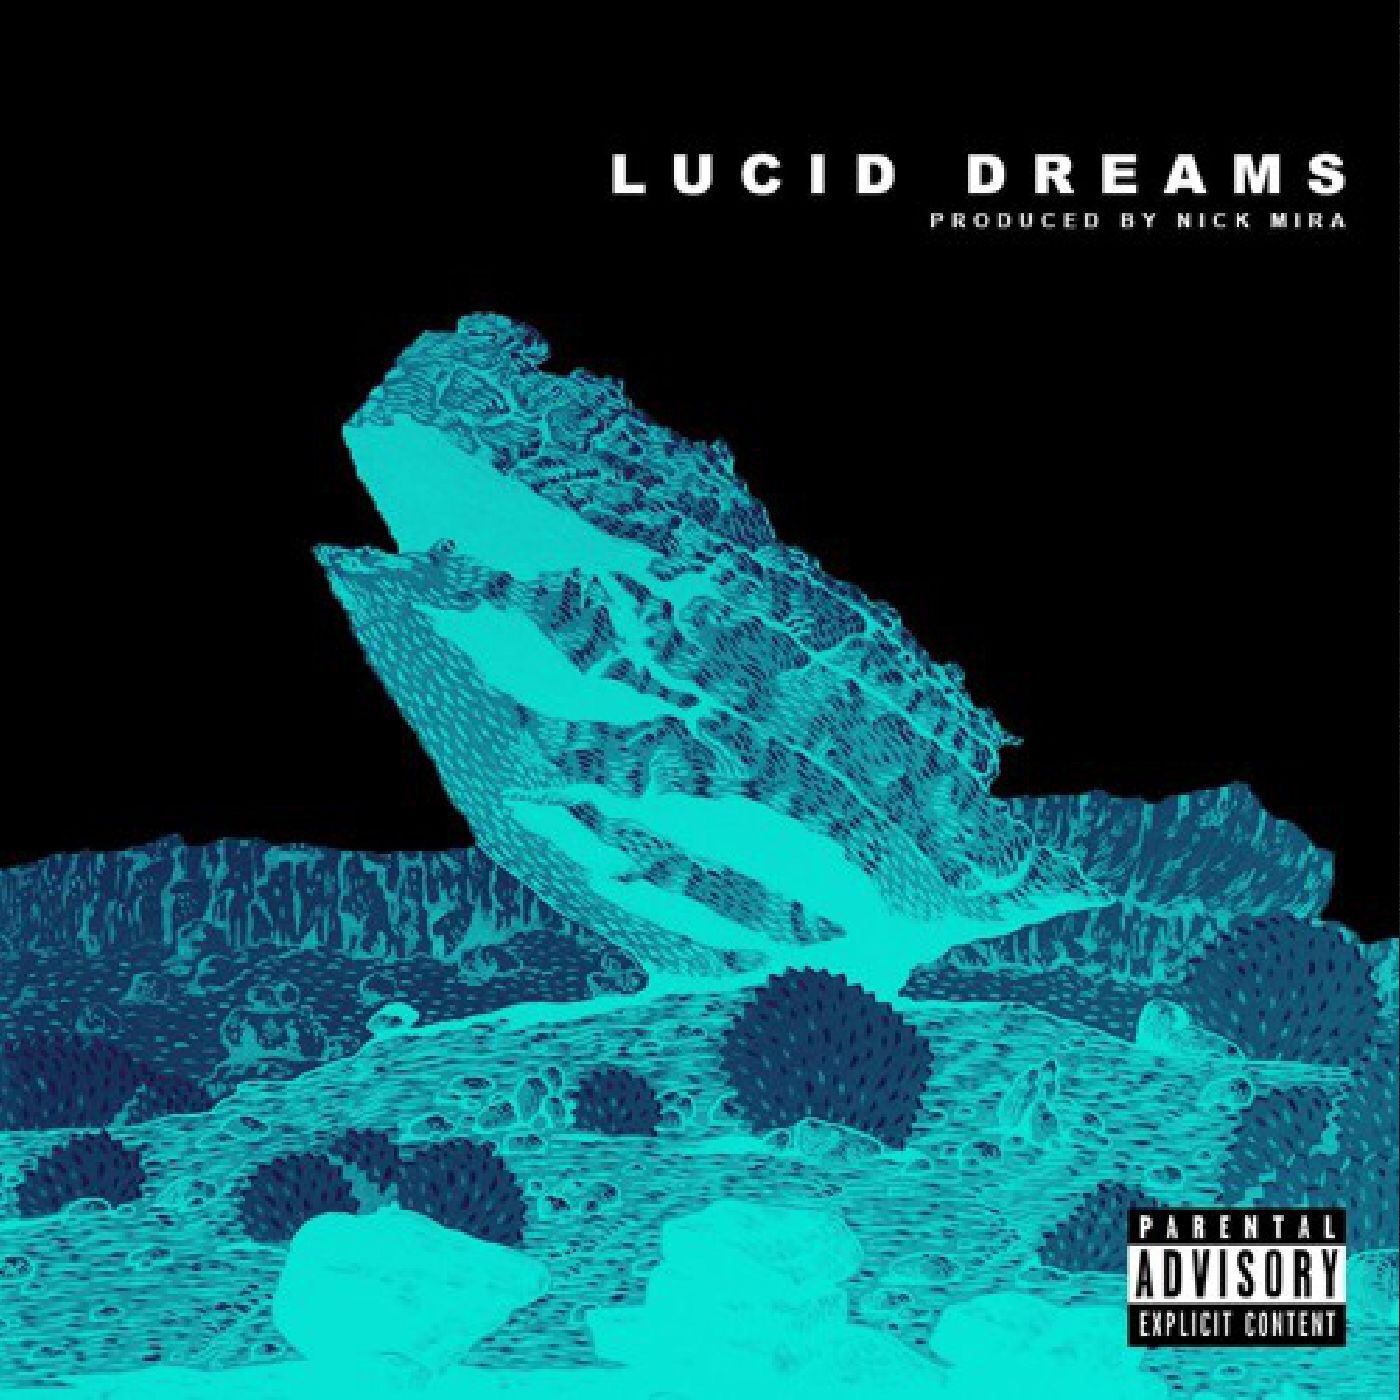 Lucid Dreams Juice World Wallpaper Top